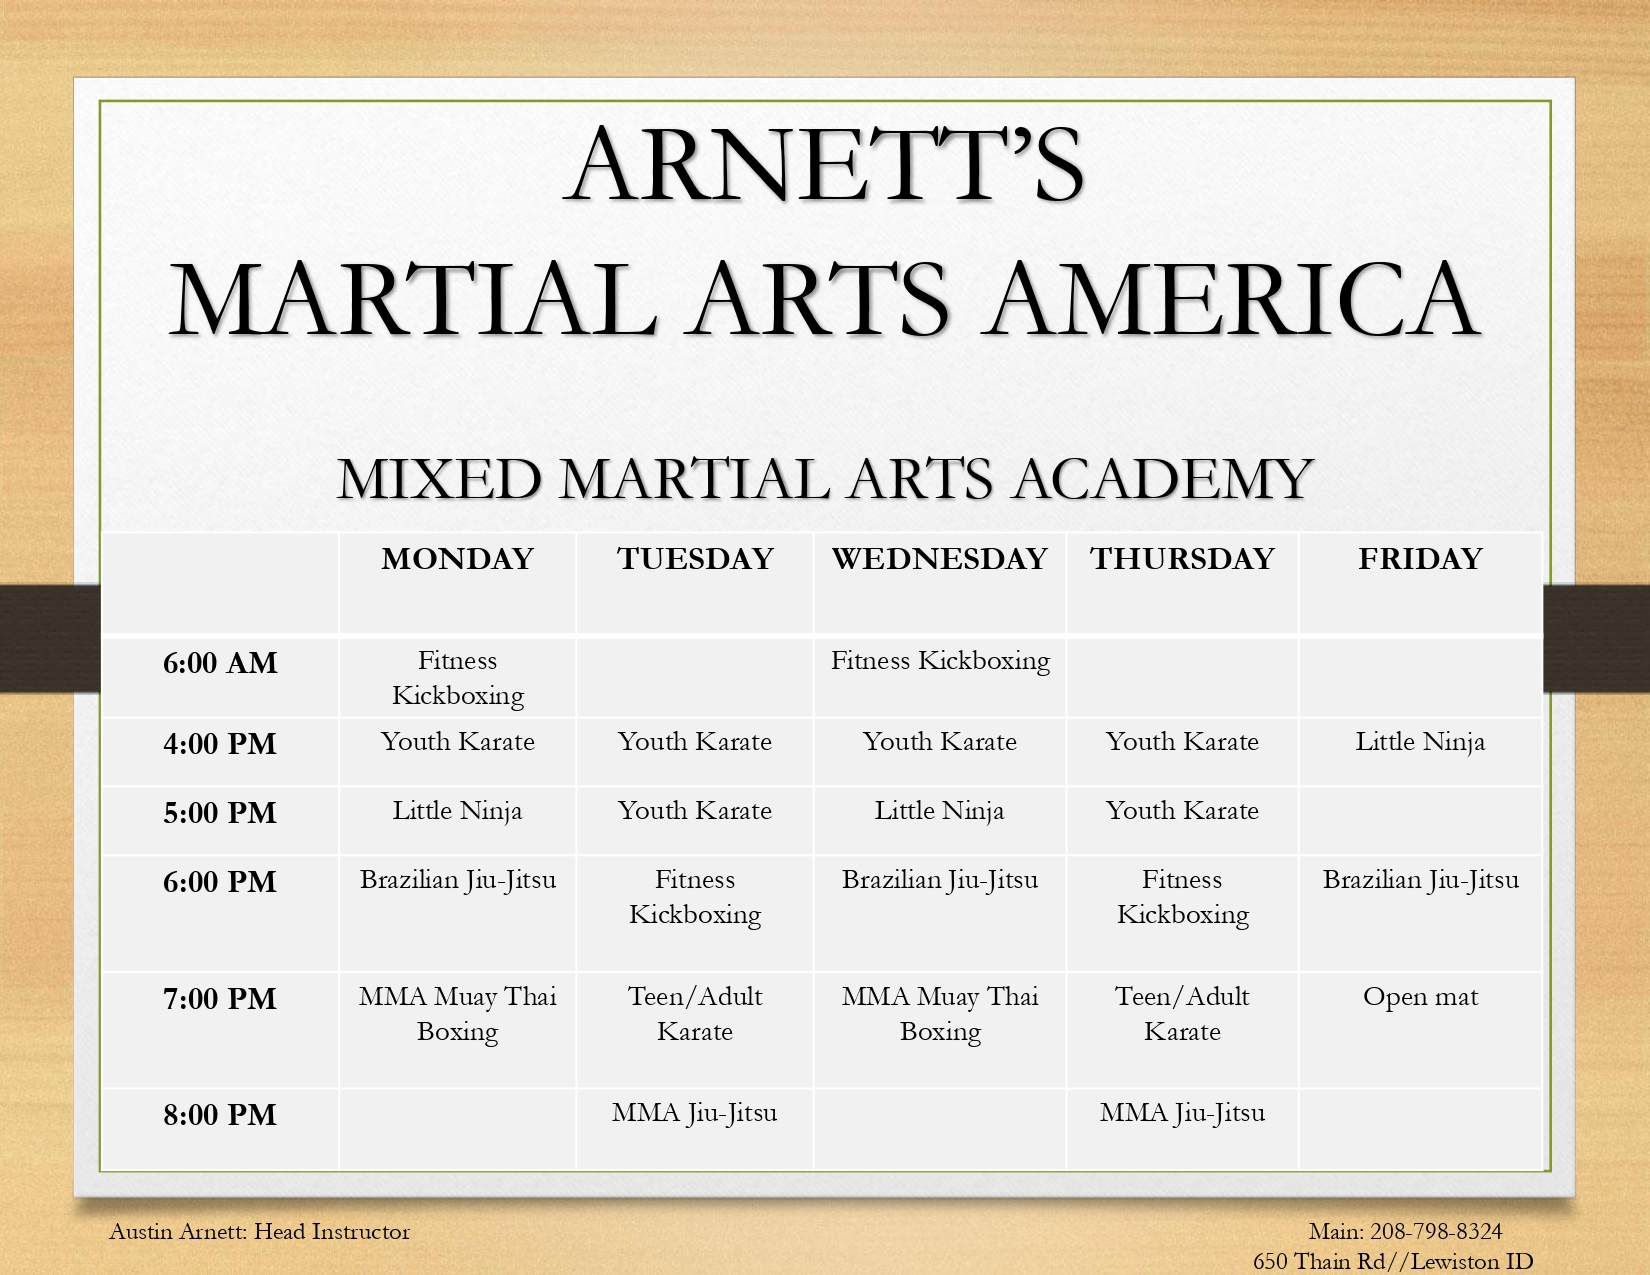 Arnett's Martial Arts America's calendar